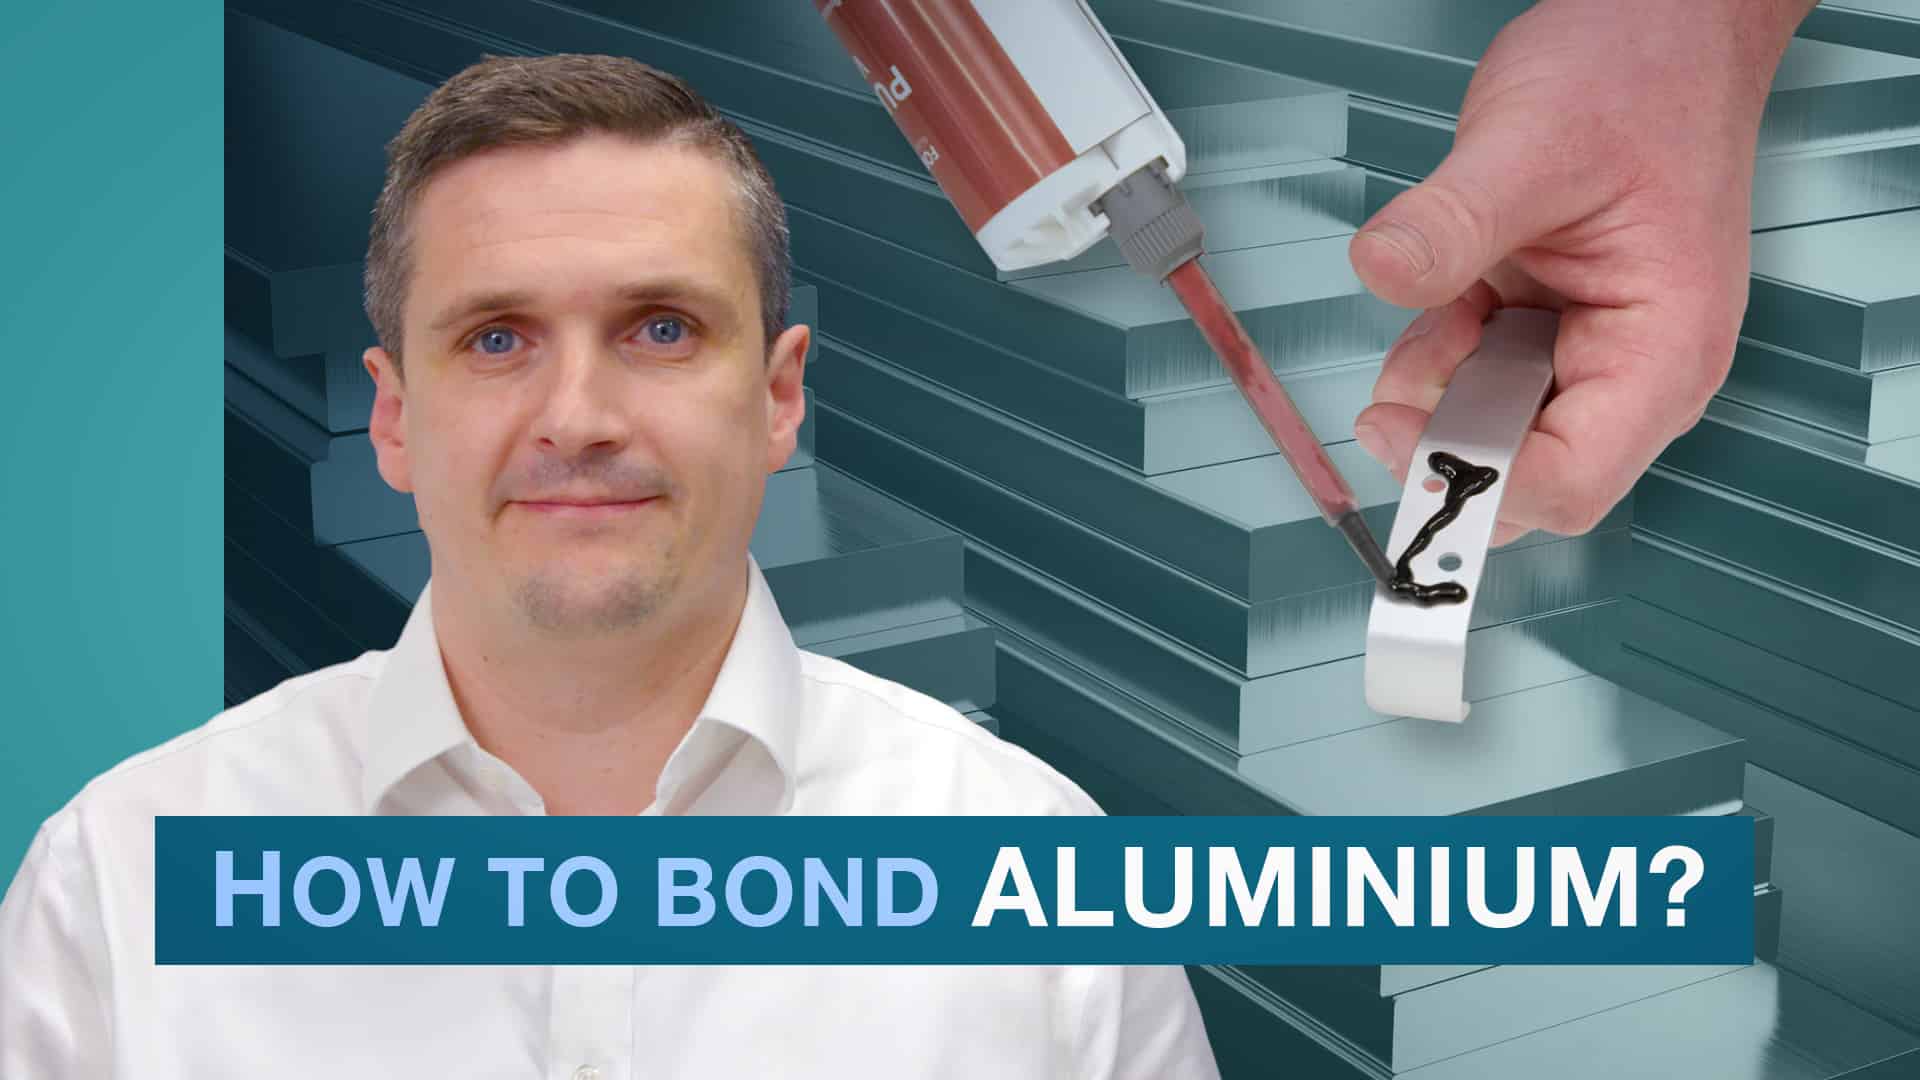 Video: How to Bond Aluminium in simple steps